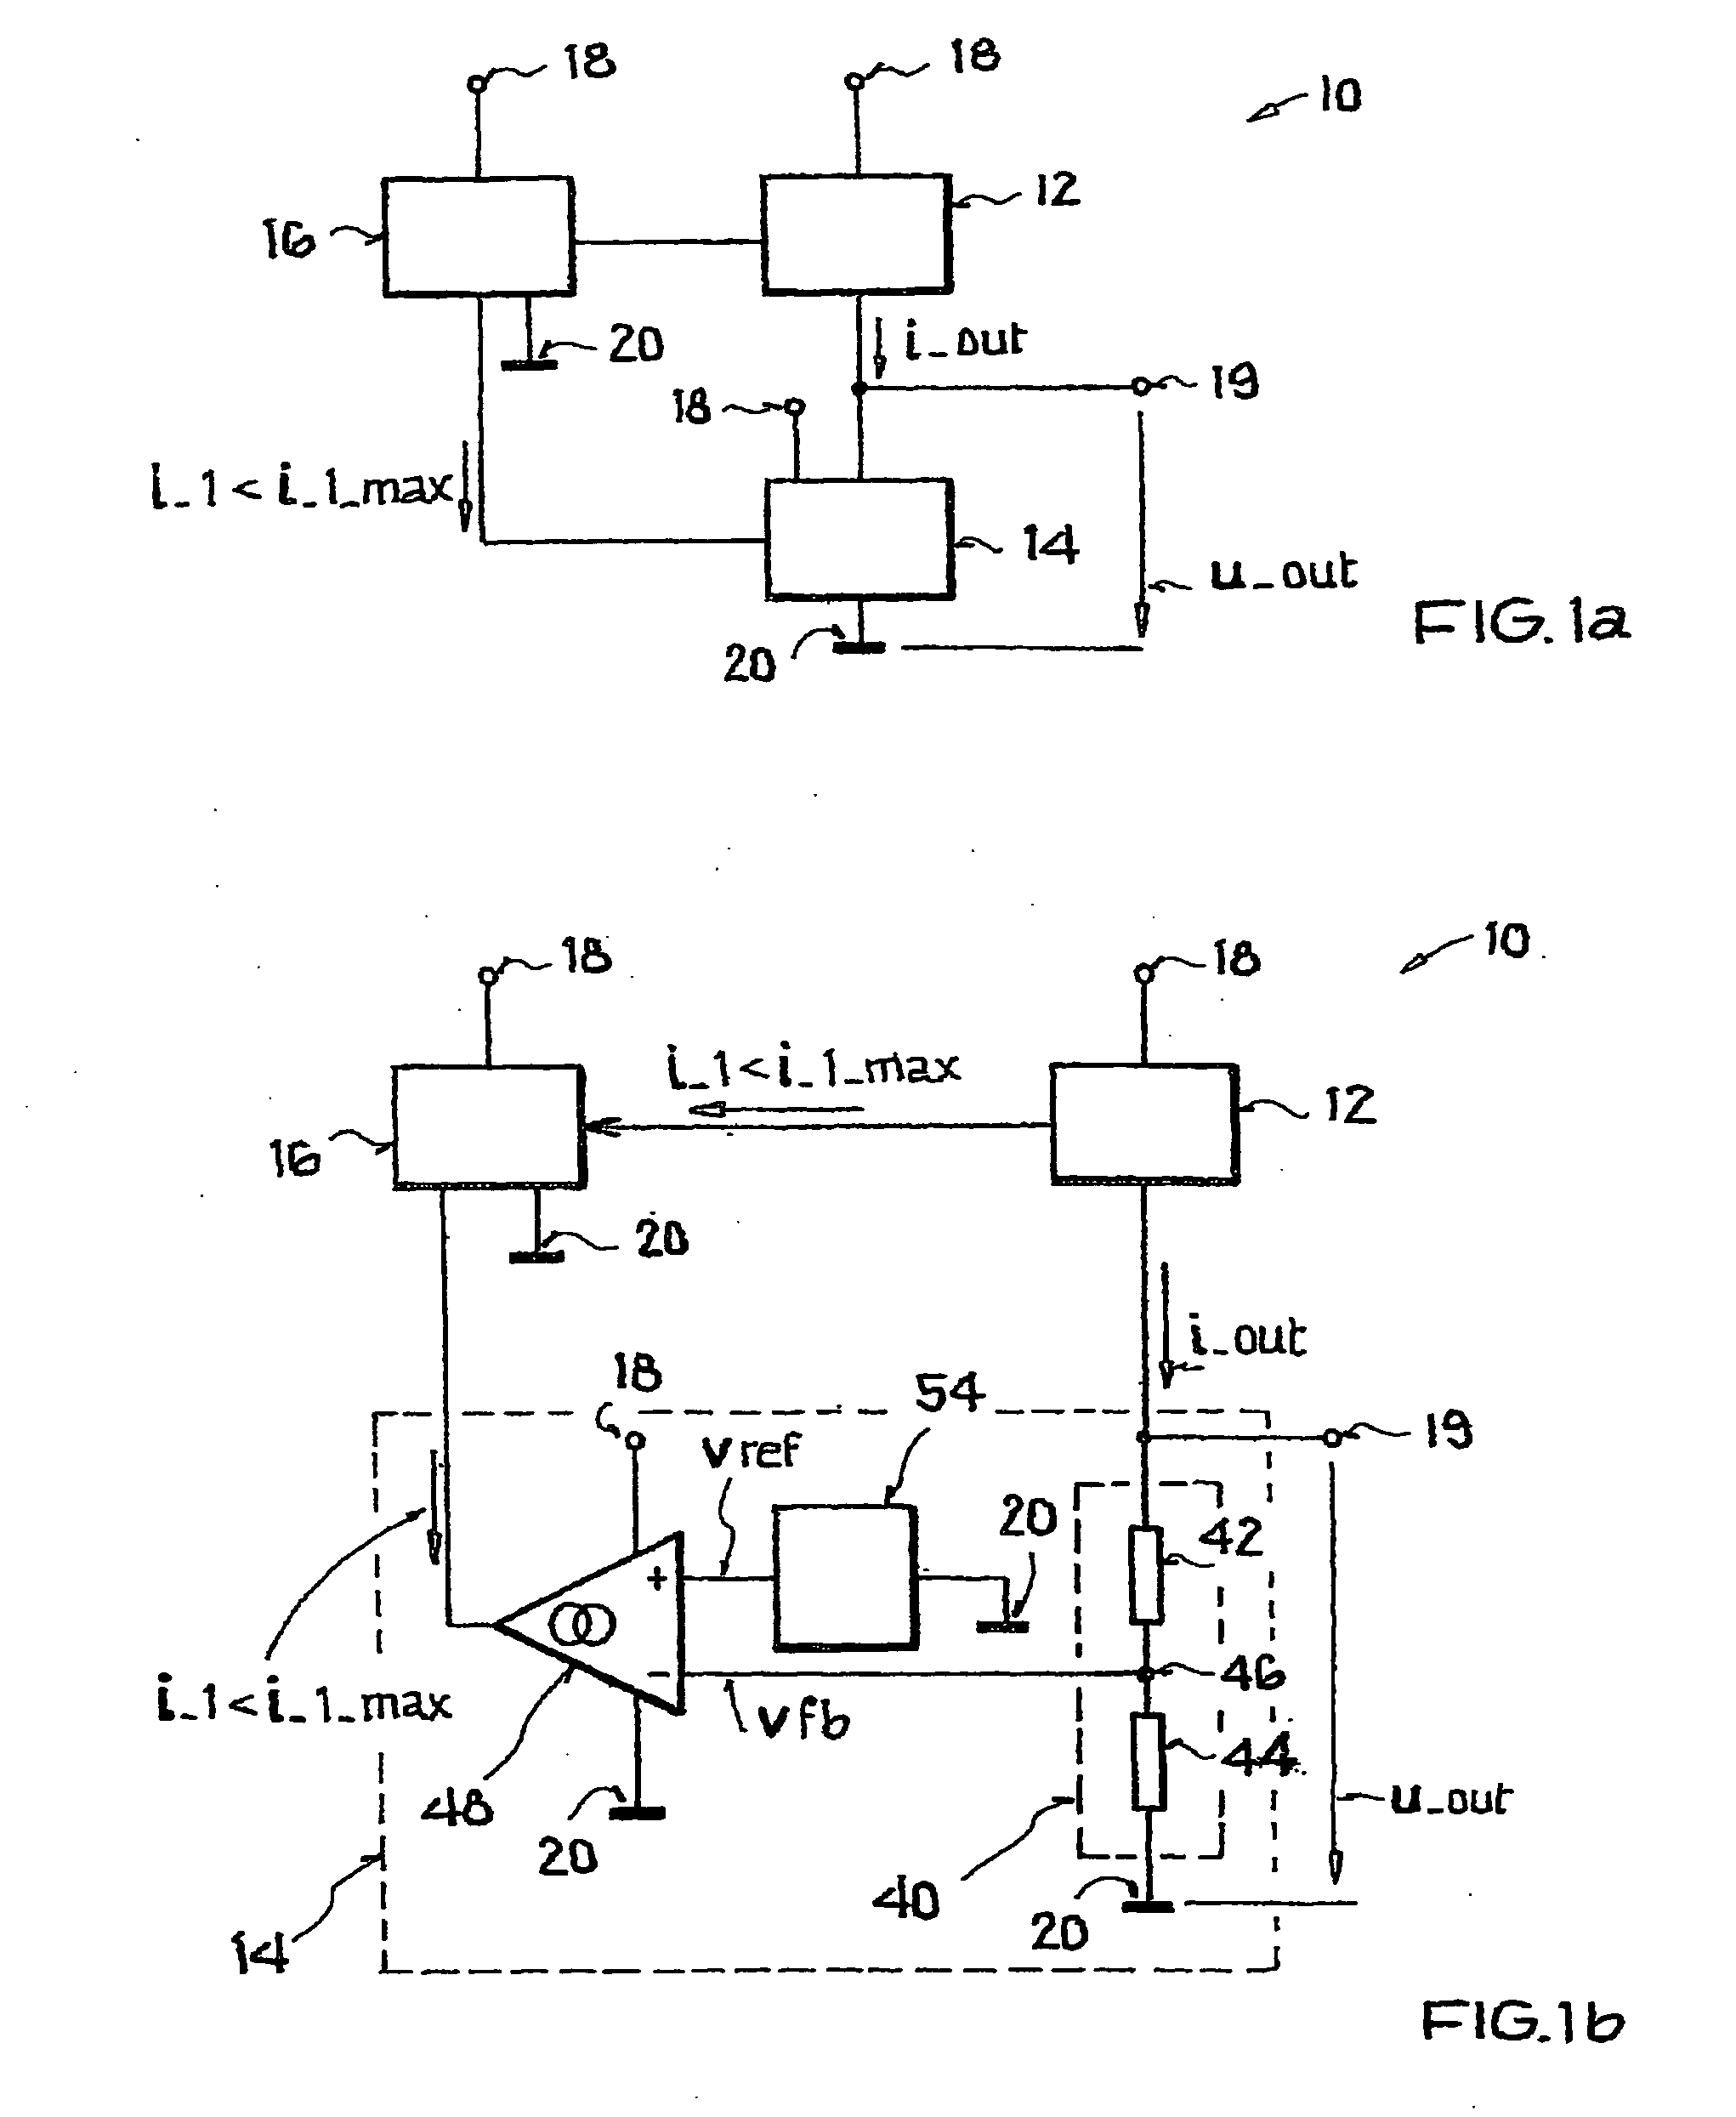 Constant voltage source with output current limitation